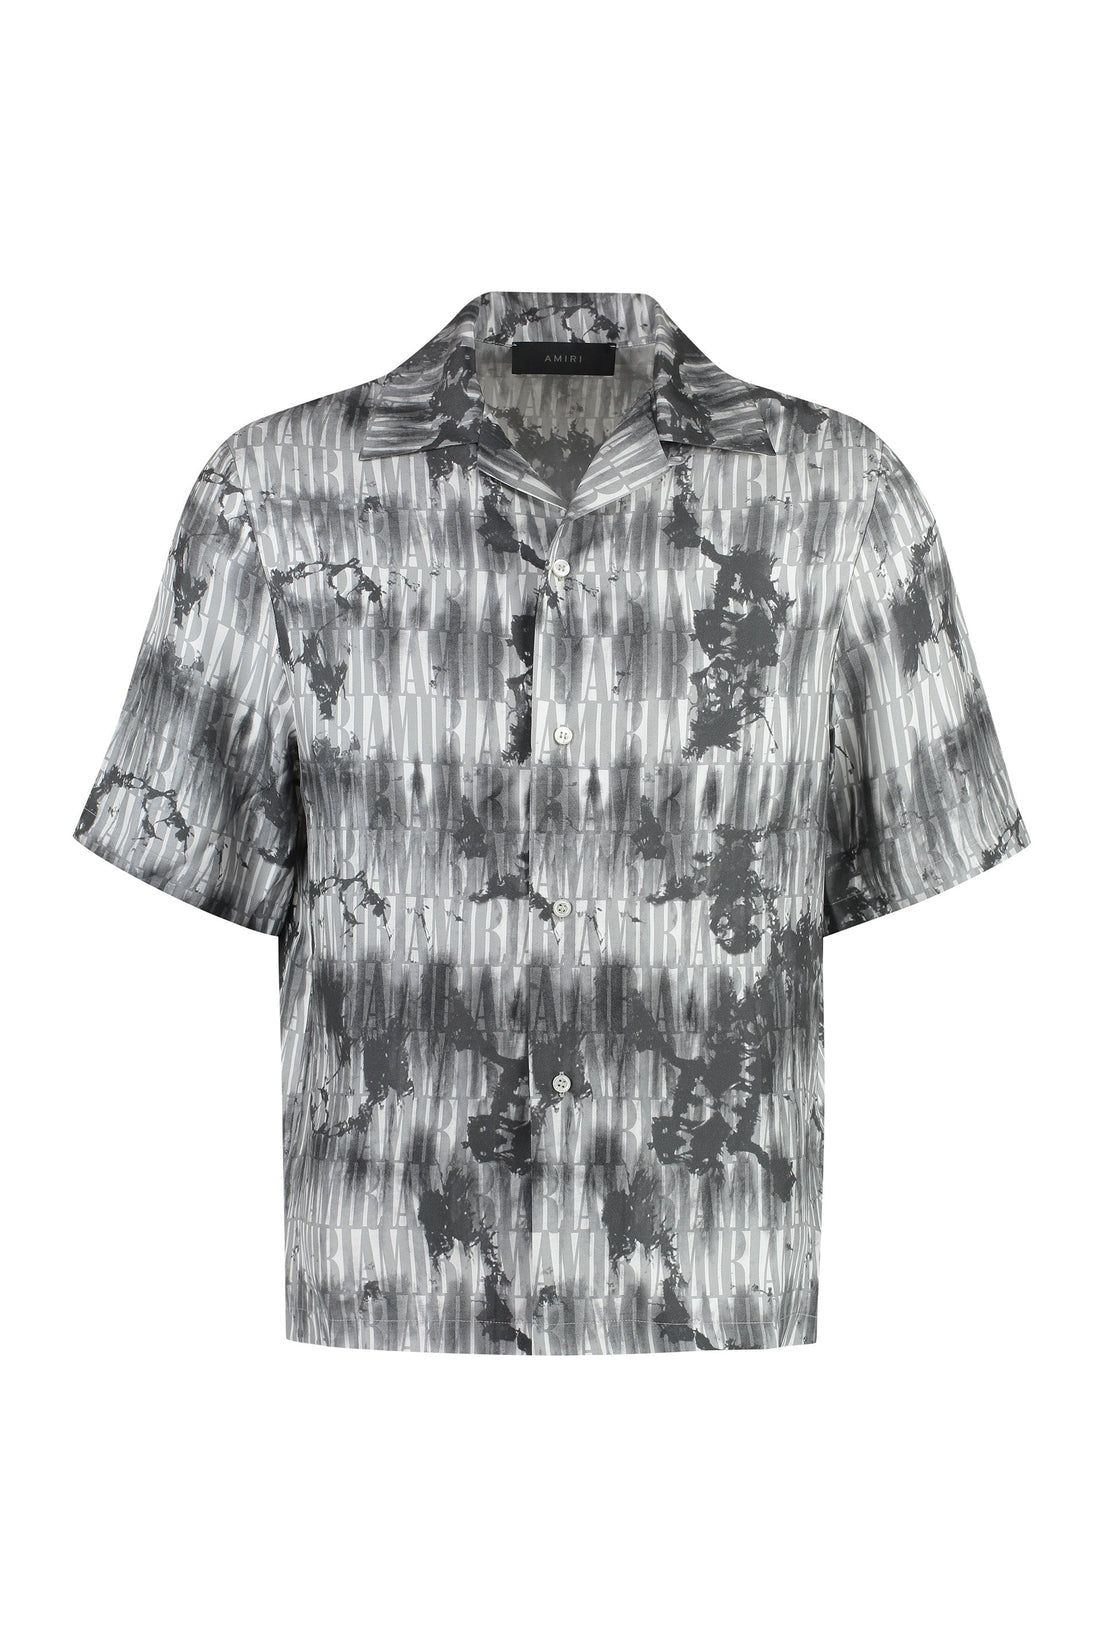 AMIRI-OUTLET-SALE-Printed silk shirt-ARCHIVIST